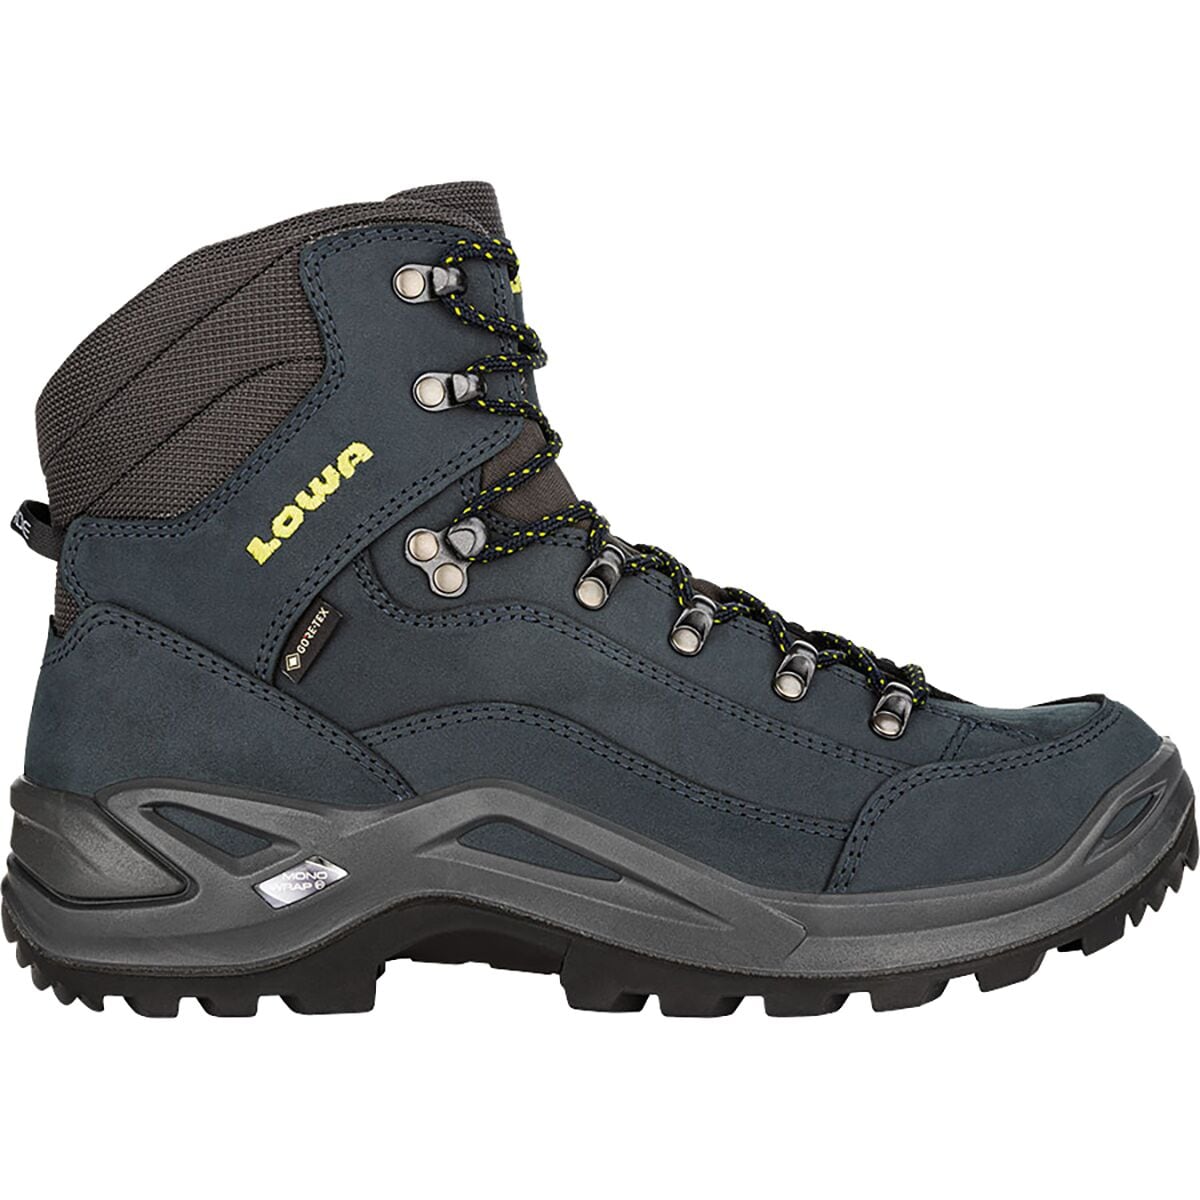 Renegade GTX Mid Hiking Boot - Men